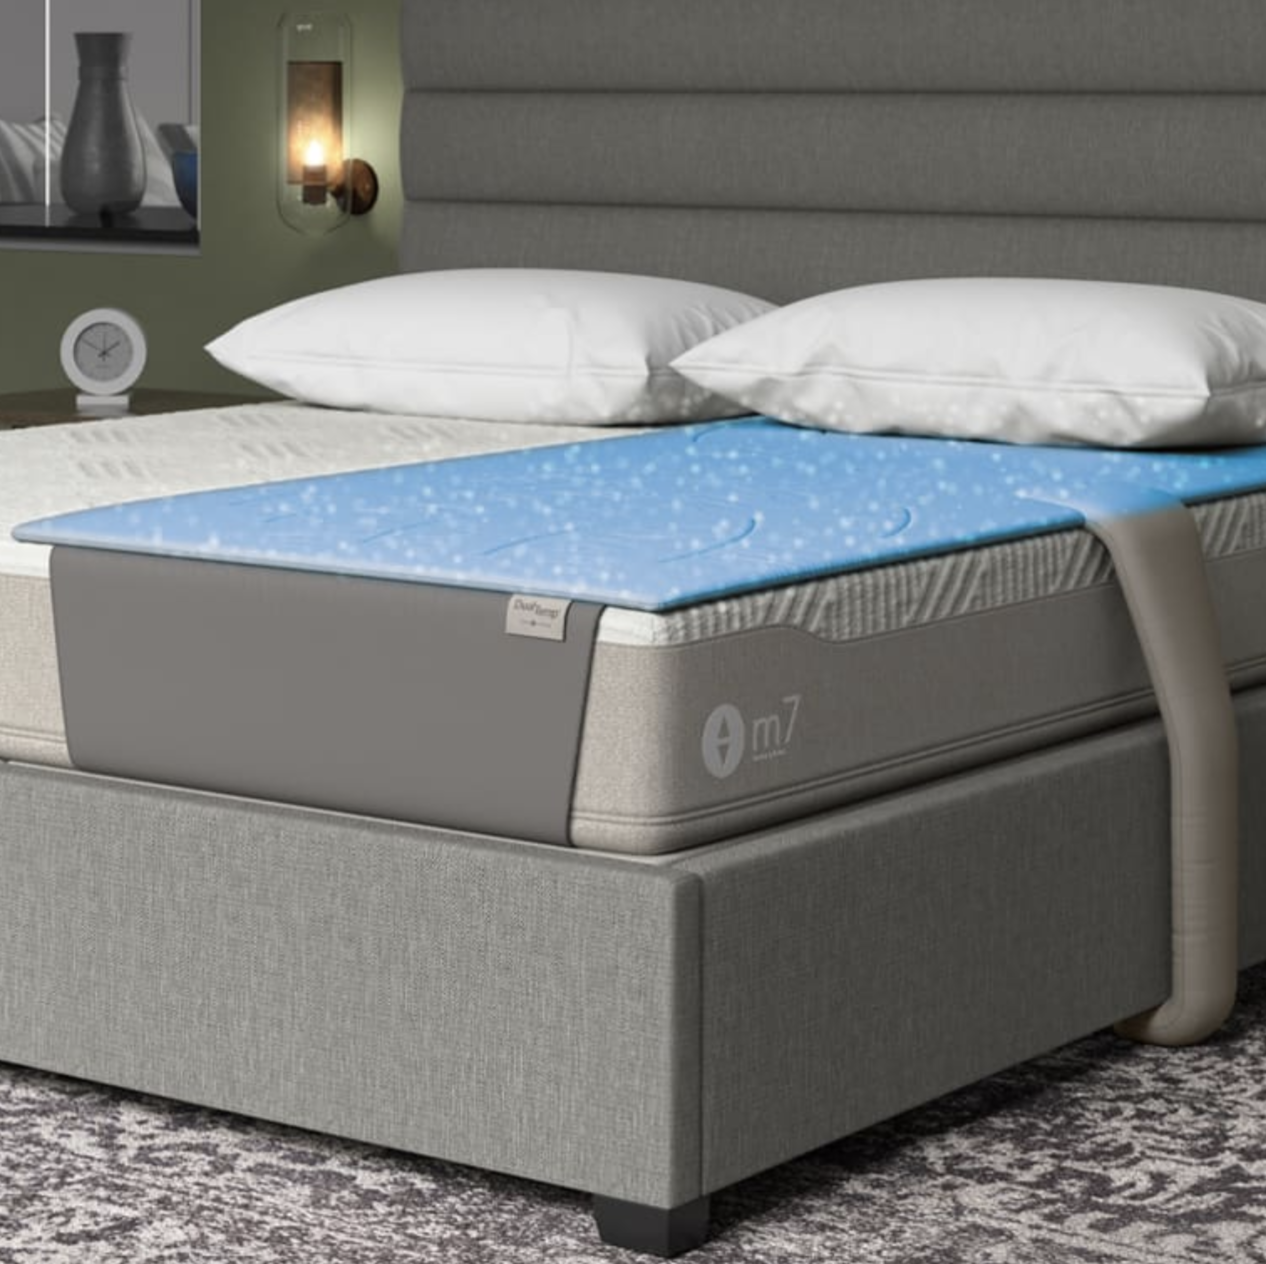 dual temp layer on a mattress